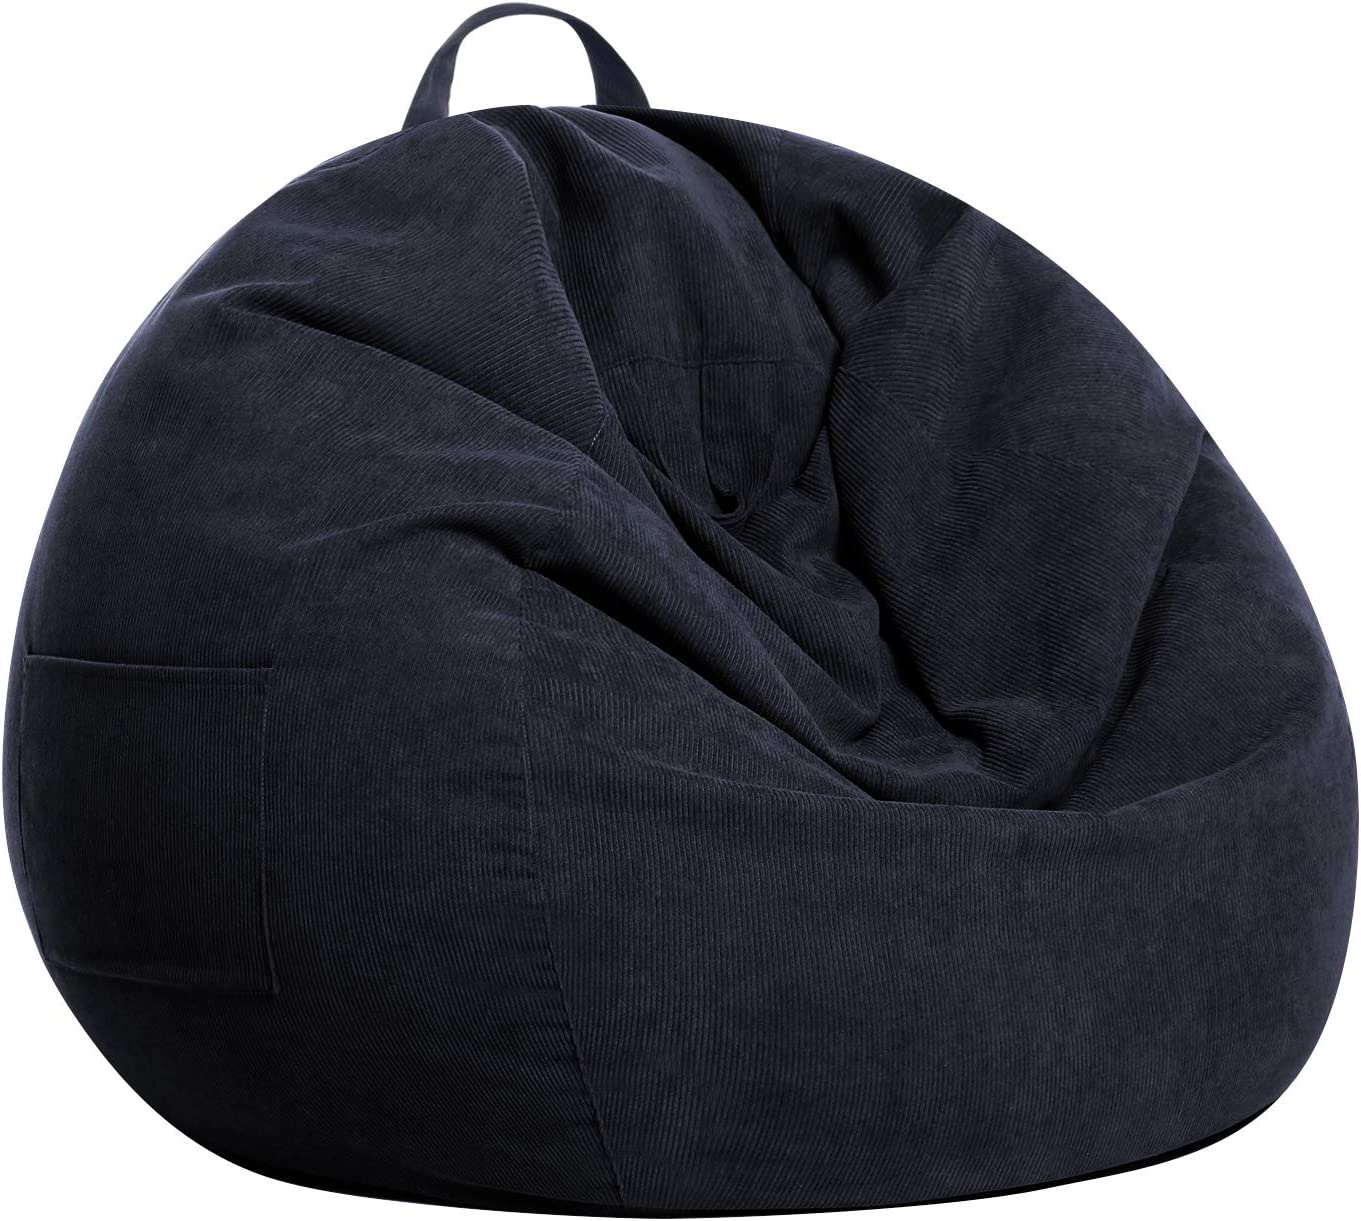 SANMADROLA Zippered Storage Bean Bag Chair Cover